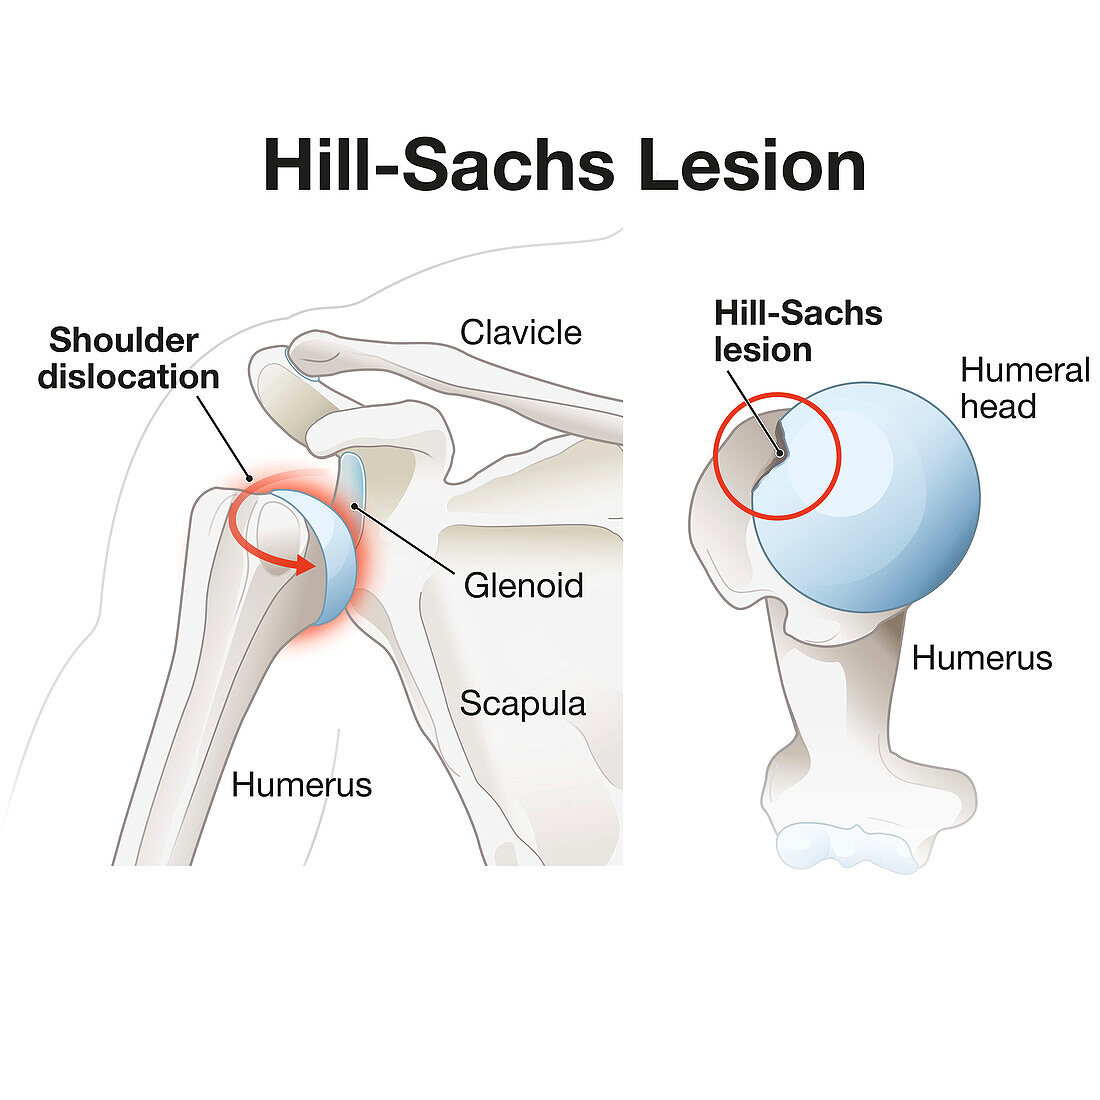 Hill-Sachs lesion of the shoulder, illustration